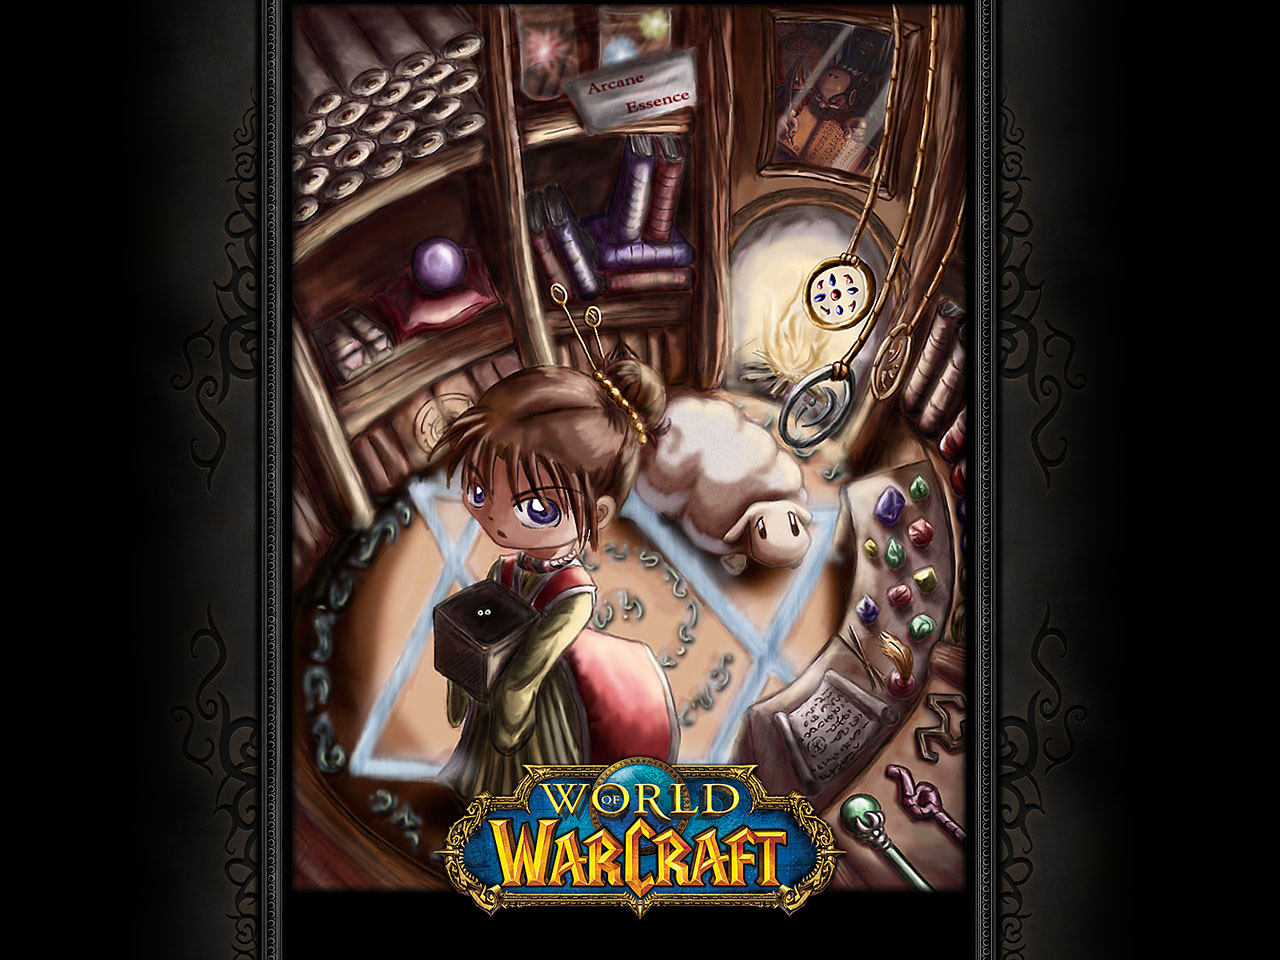  Mage [fanart]   World of Warcraft Wallpaper Mage [fanart] Wallpaper